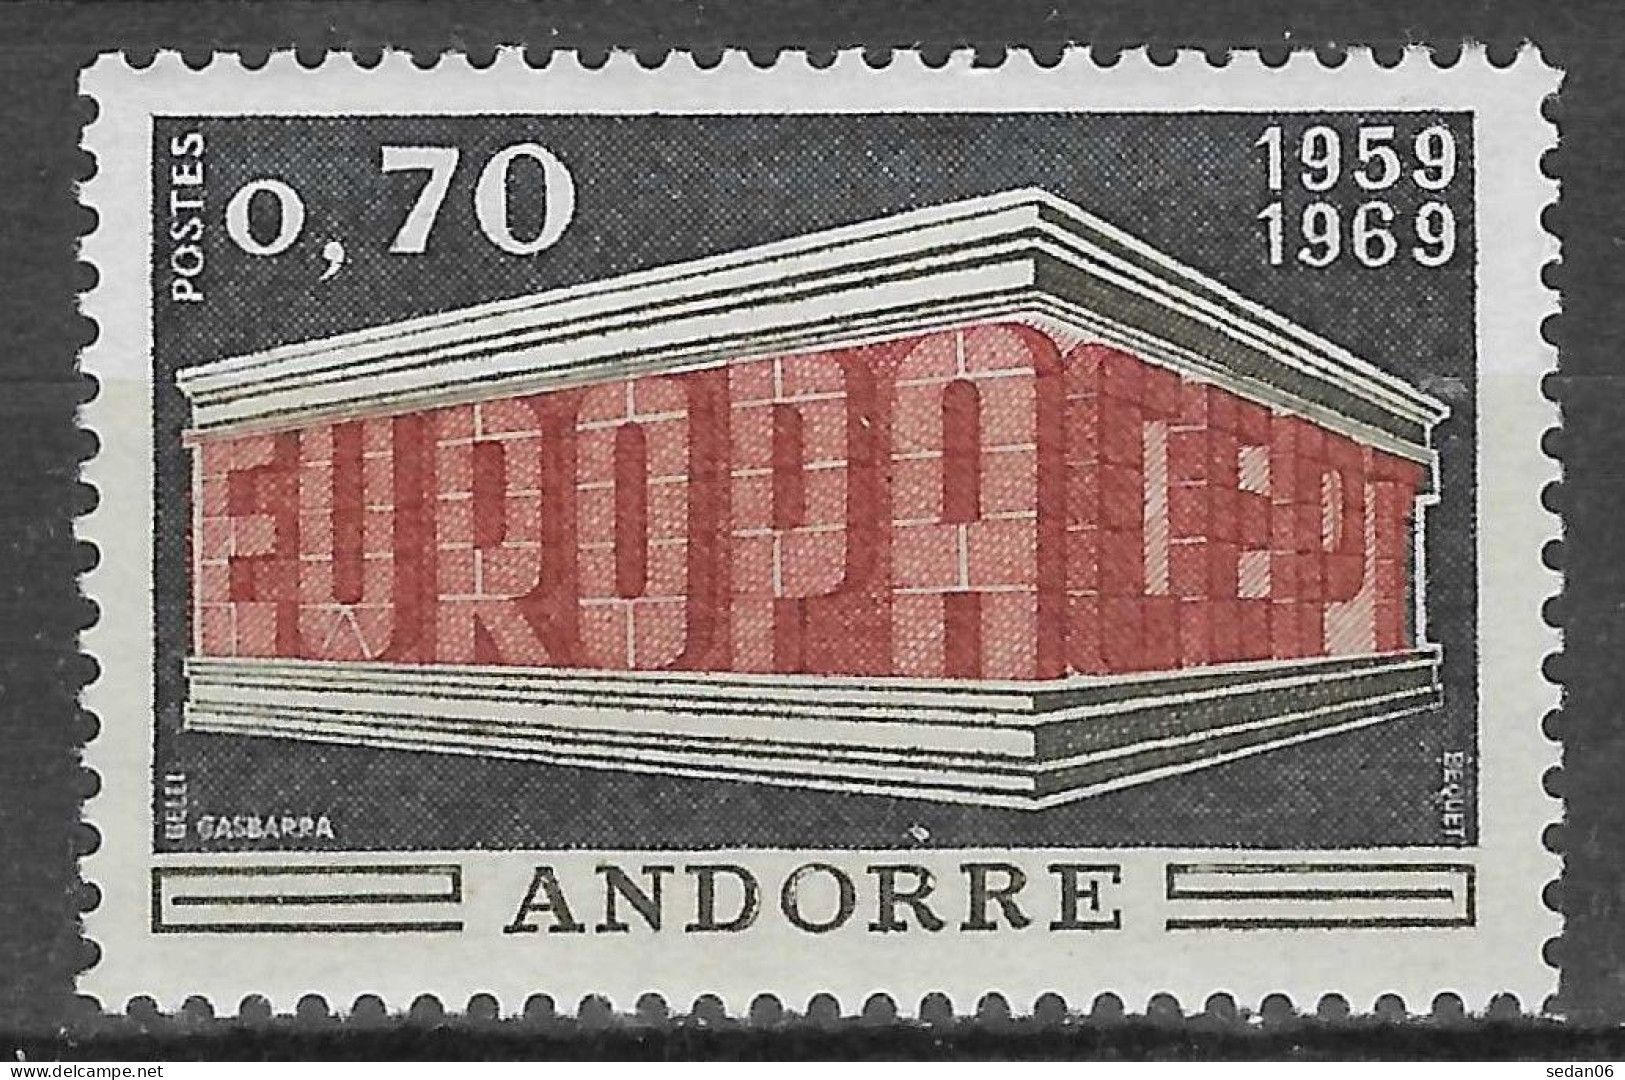 ANDORRE FRANCAIS N°195* (europa 1969) - COTE 22.00 € - 1969